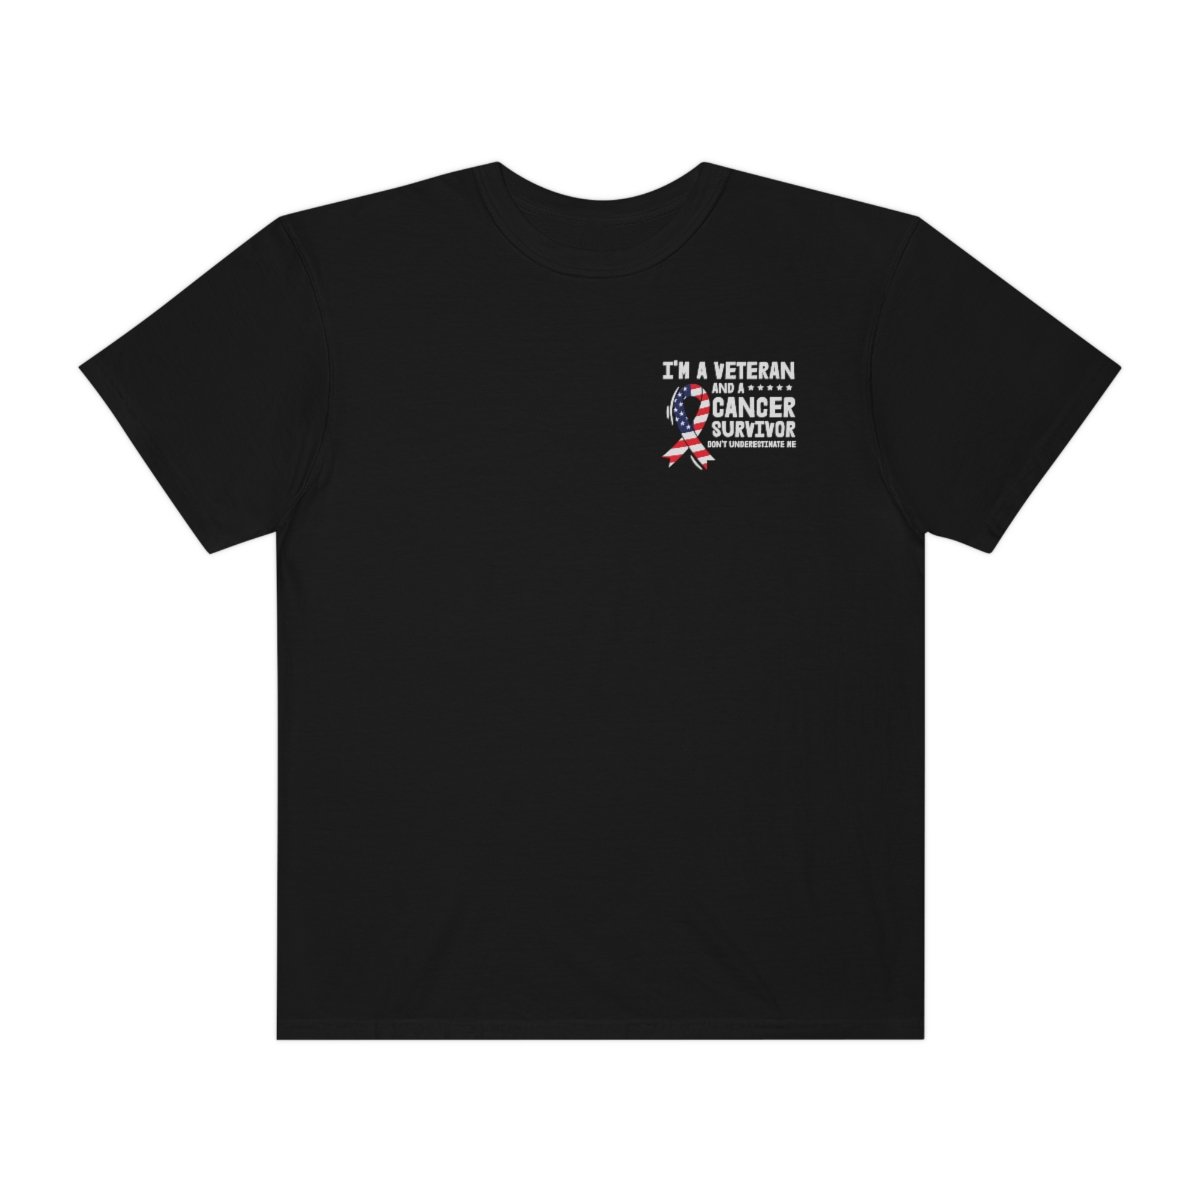 I'm A Veteran and a Cancer Survivor - Unisex - Garment-Dyed - Dark Colors - T-shirt